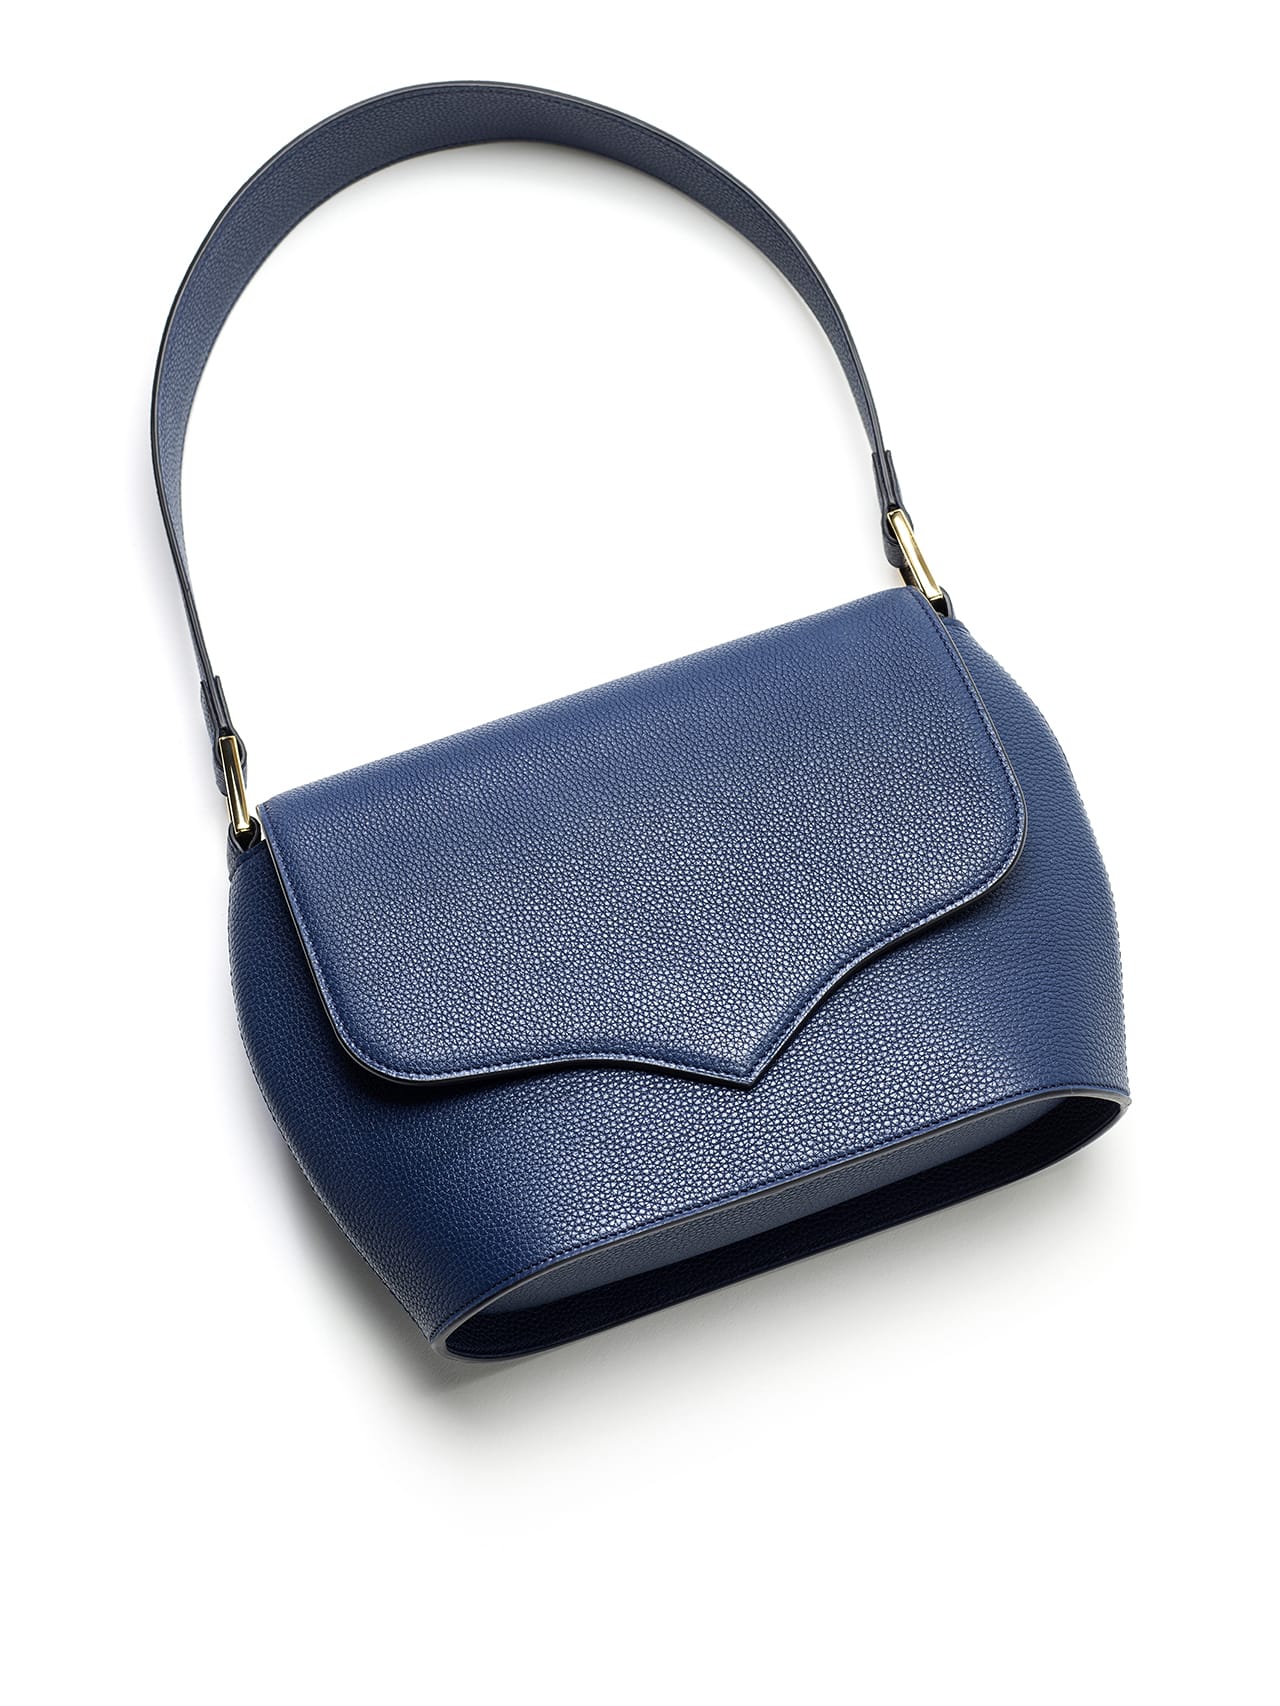 Sam handbag blue embossed calf - Maison Jean Rousseau